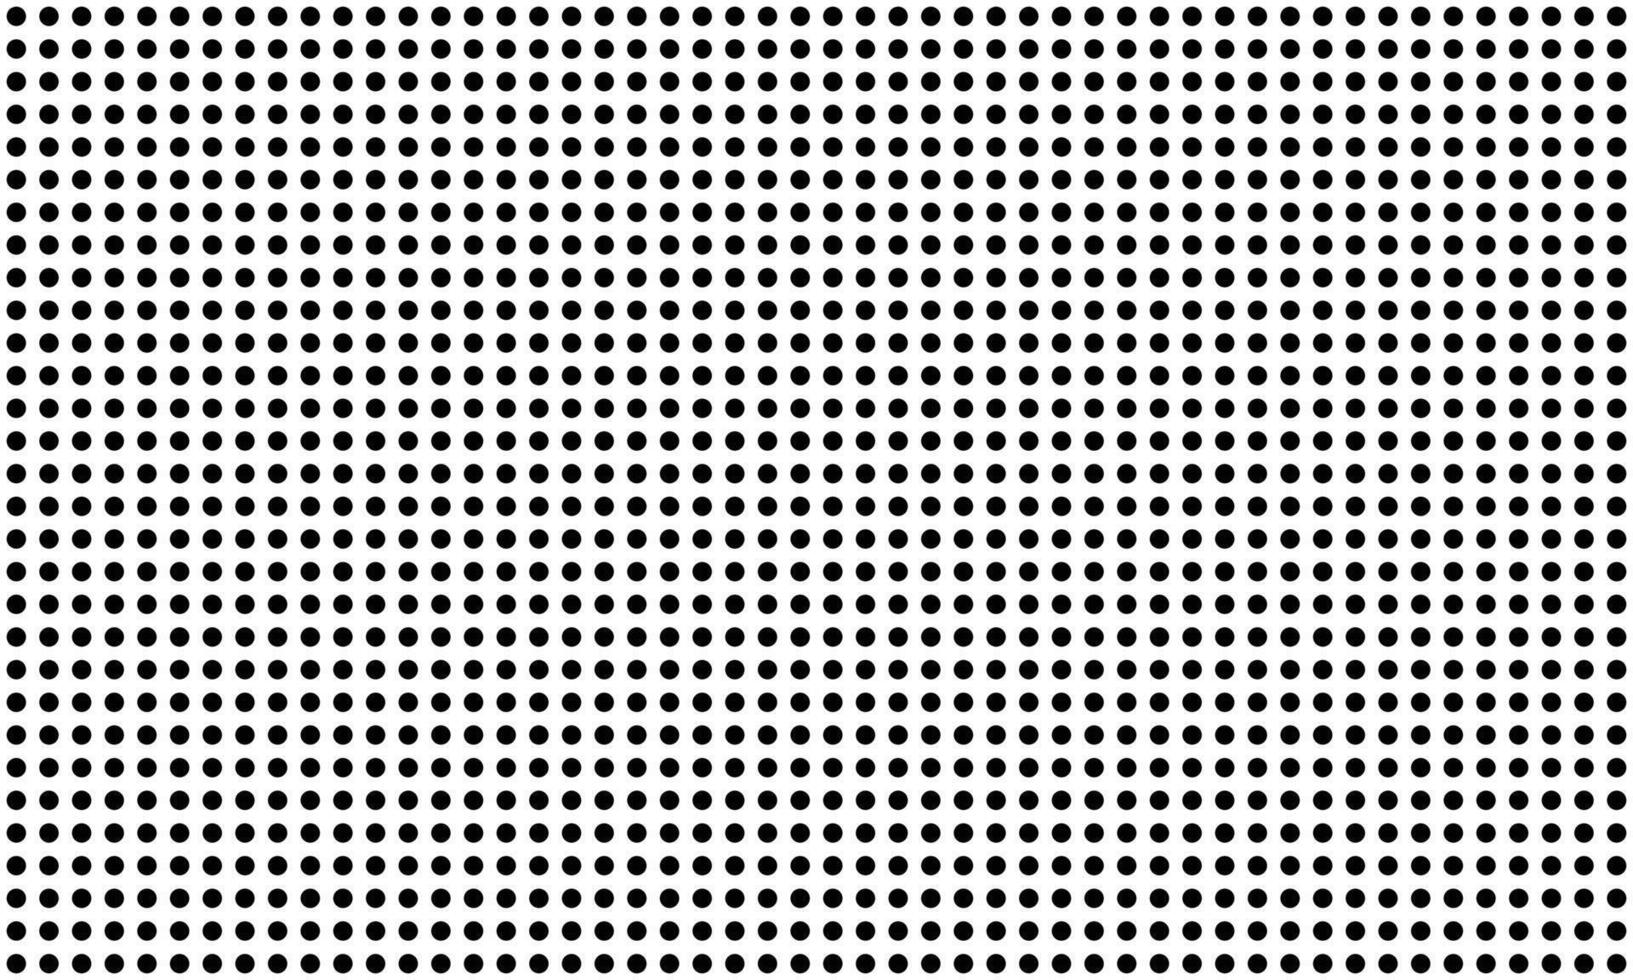 Dots monochrome pattern seamless vector